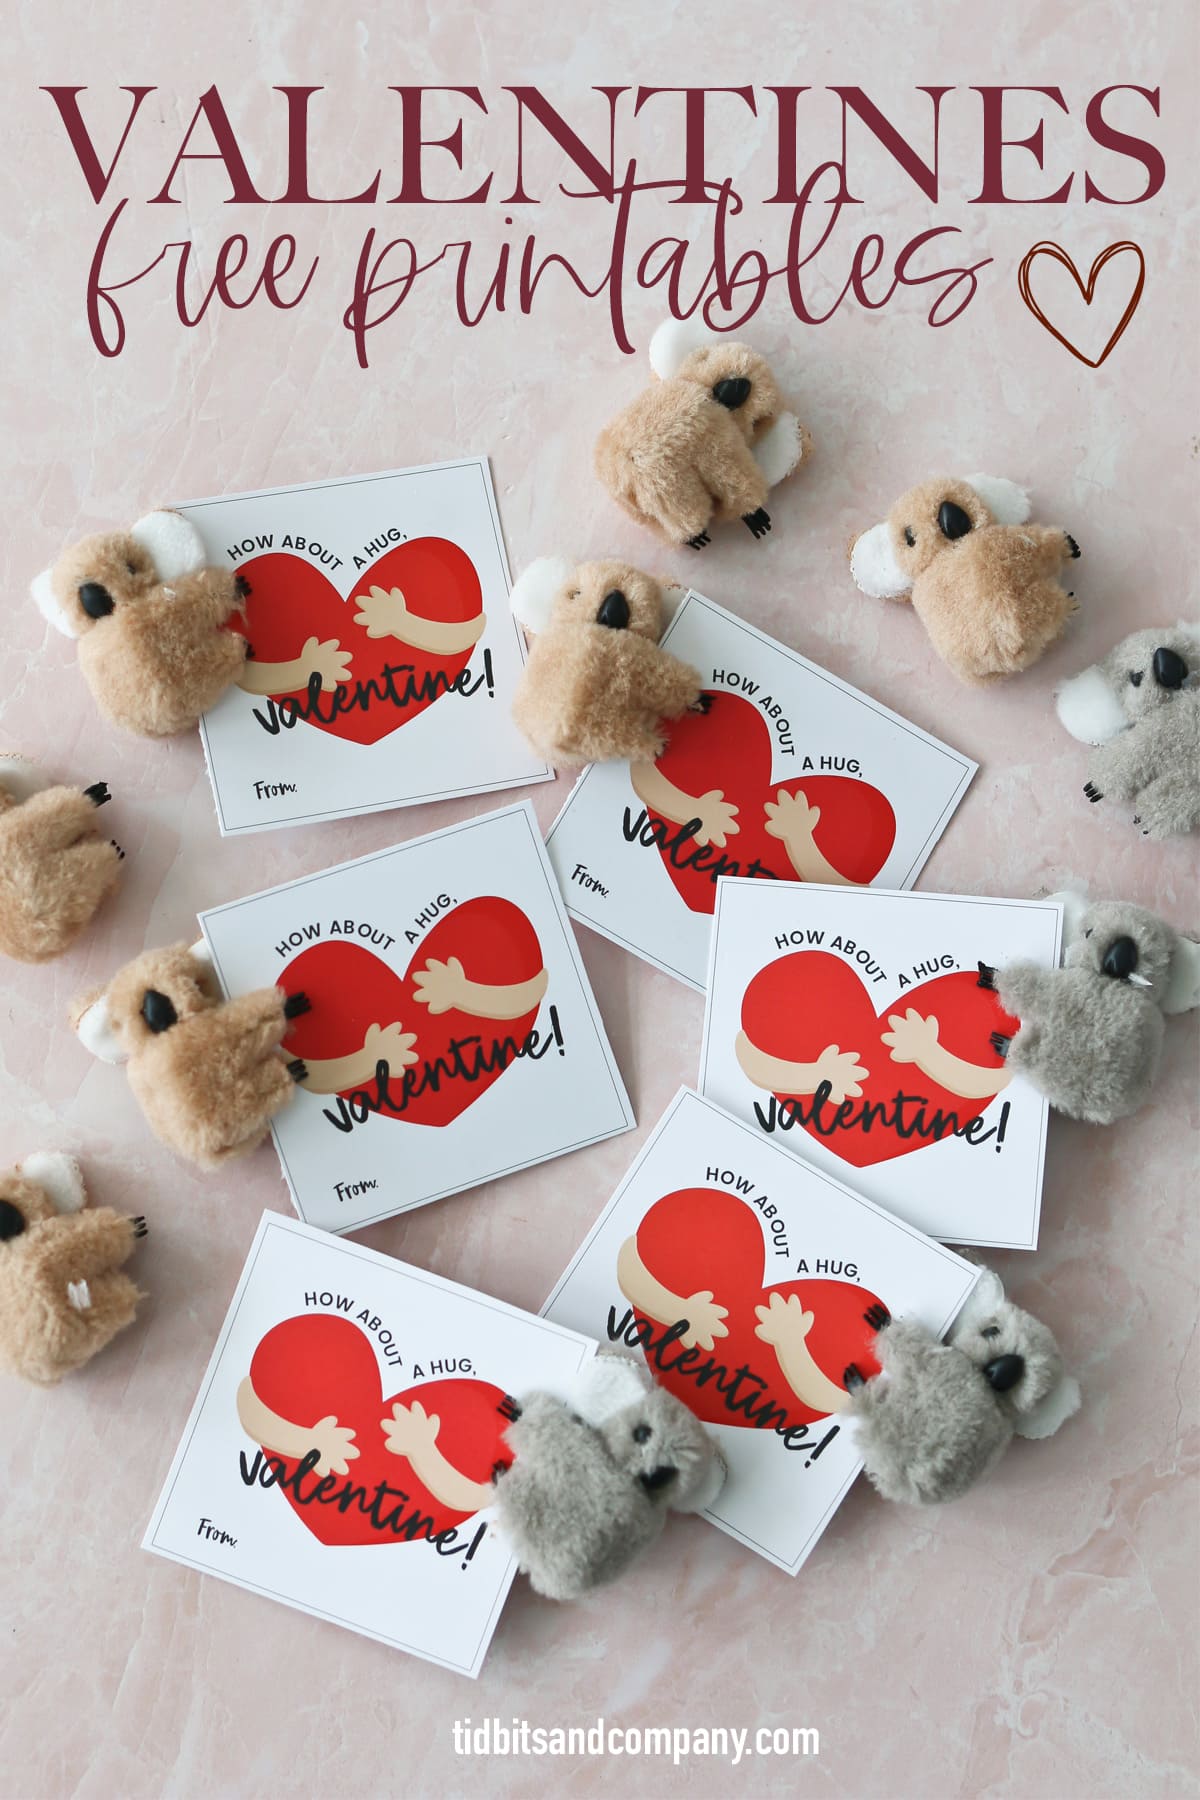 Small koala bears hug free printable valentine cards